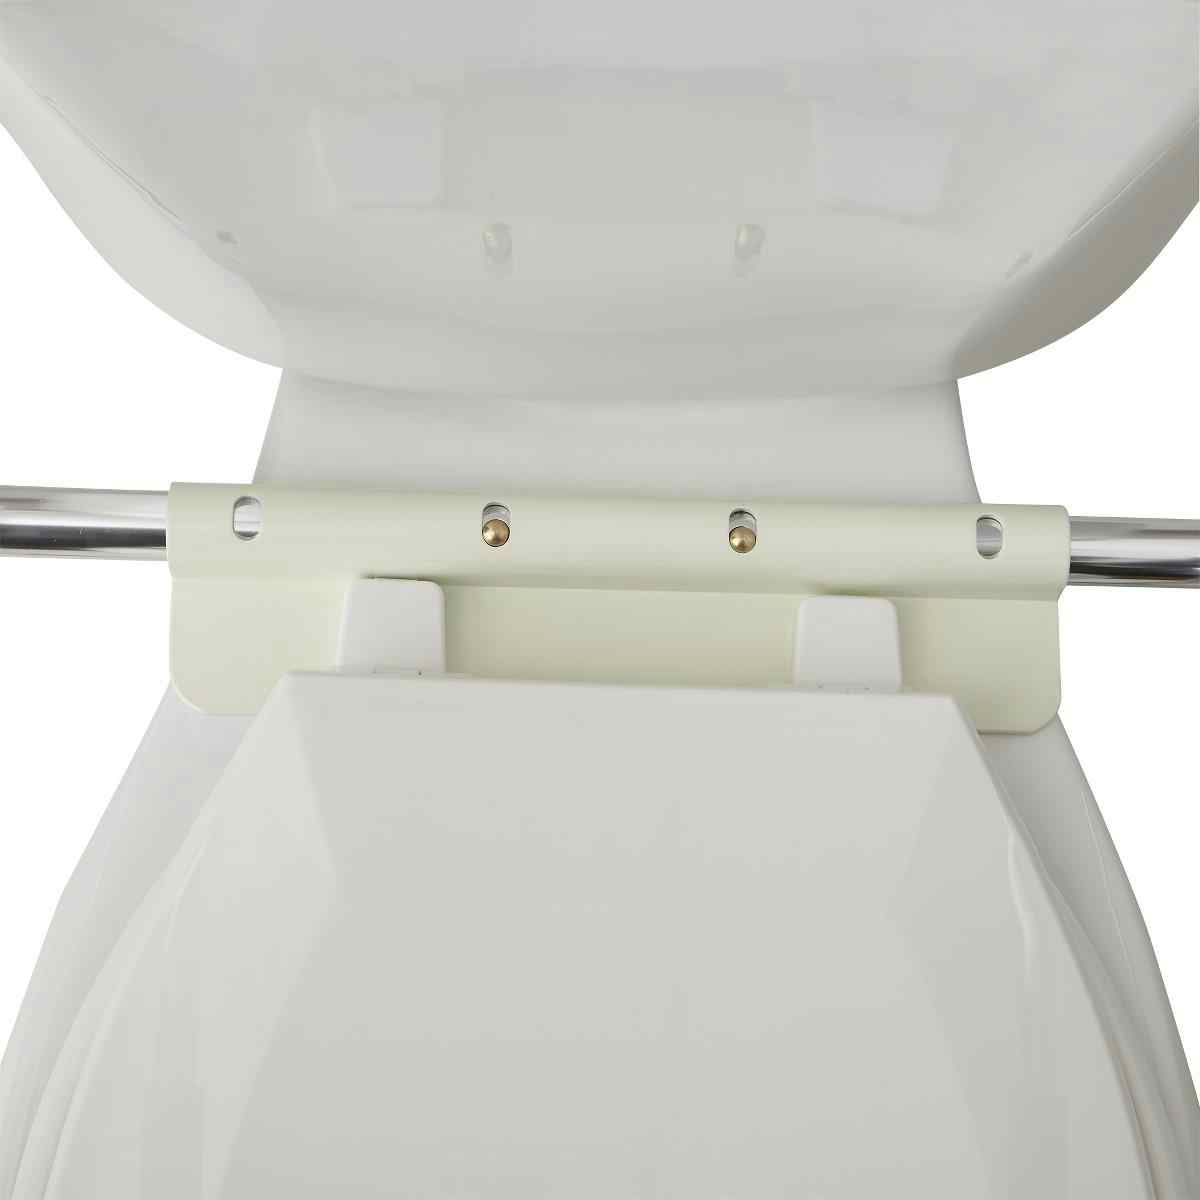 Medline Toilet Safety Rails, G30300H, 1 Each